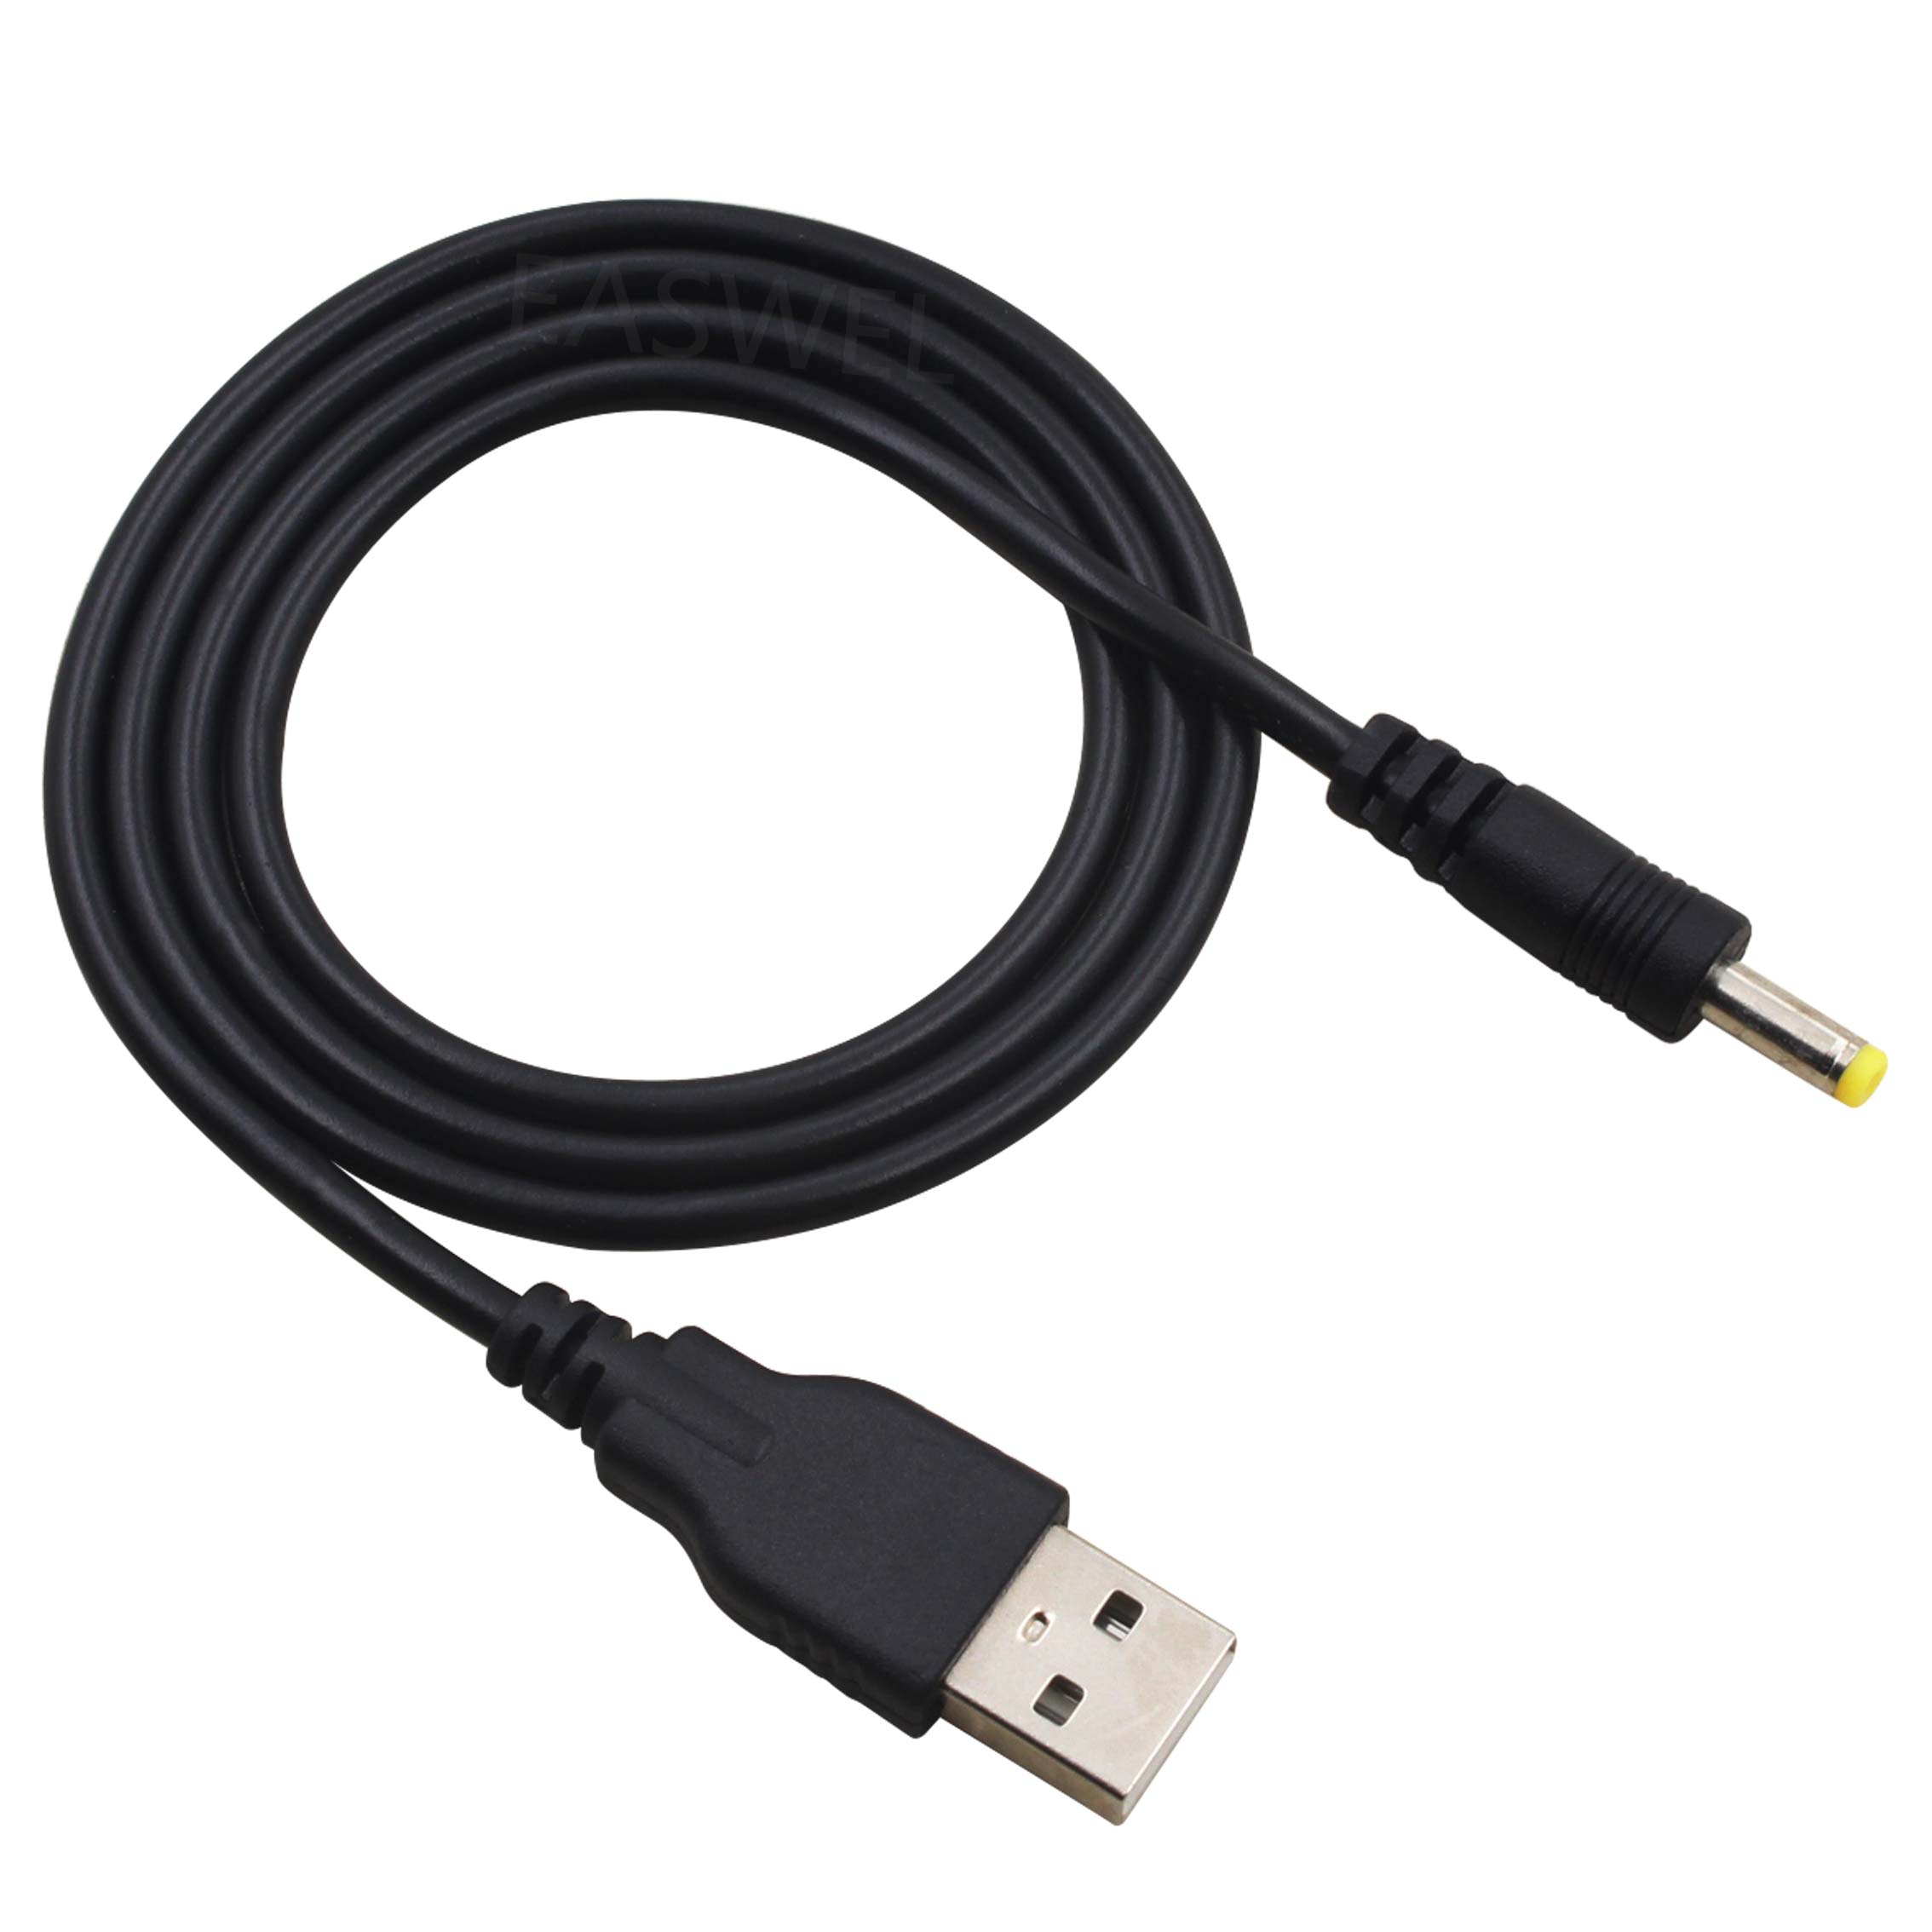 USB Power Adapter Charger Cable Koord Voor Omron HEM-7130 Bloeddrukmeter